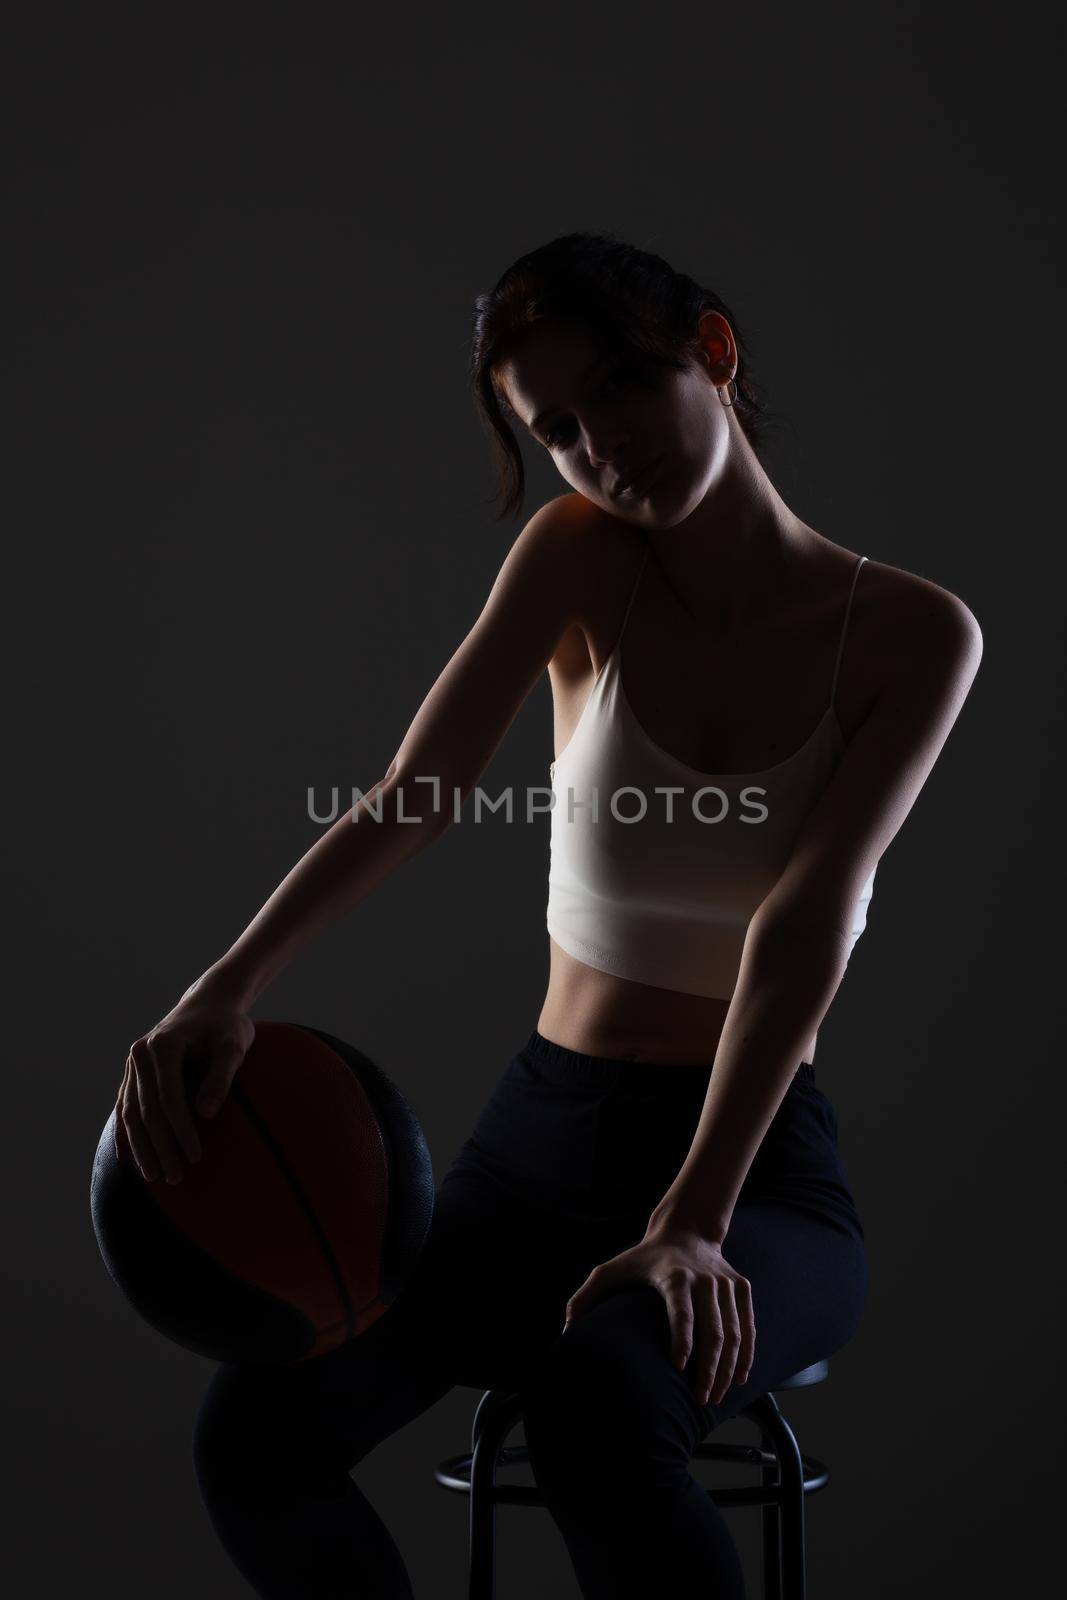 Teenage girl with basketball. Side lit studio portrait against dark background.. by kokimk